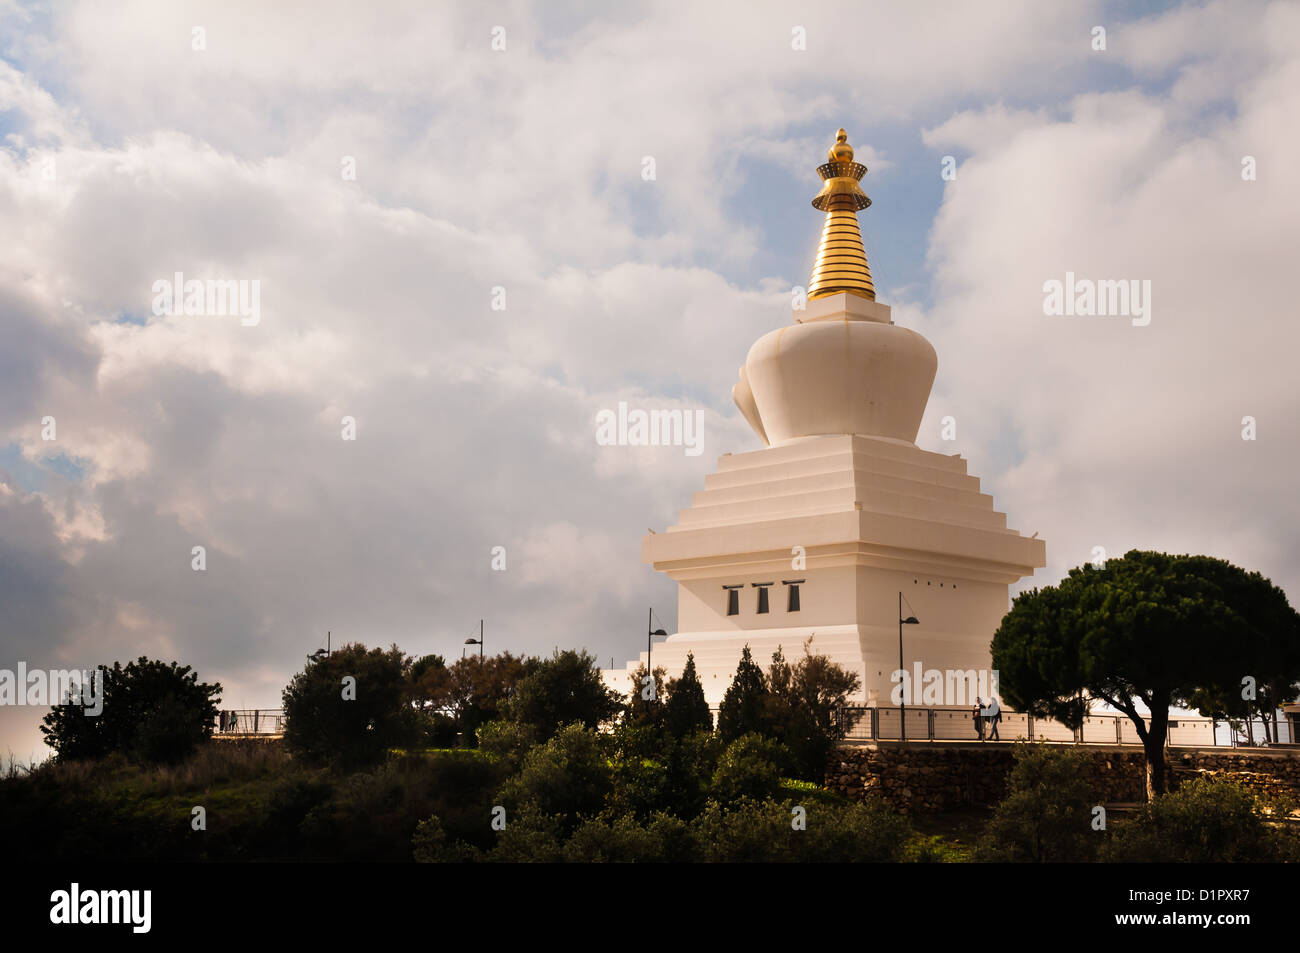 The Stupa (temple) at Benalmadena Spain Stock Photo